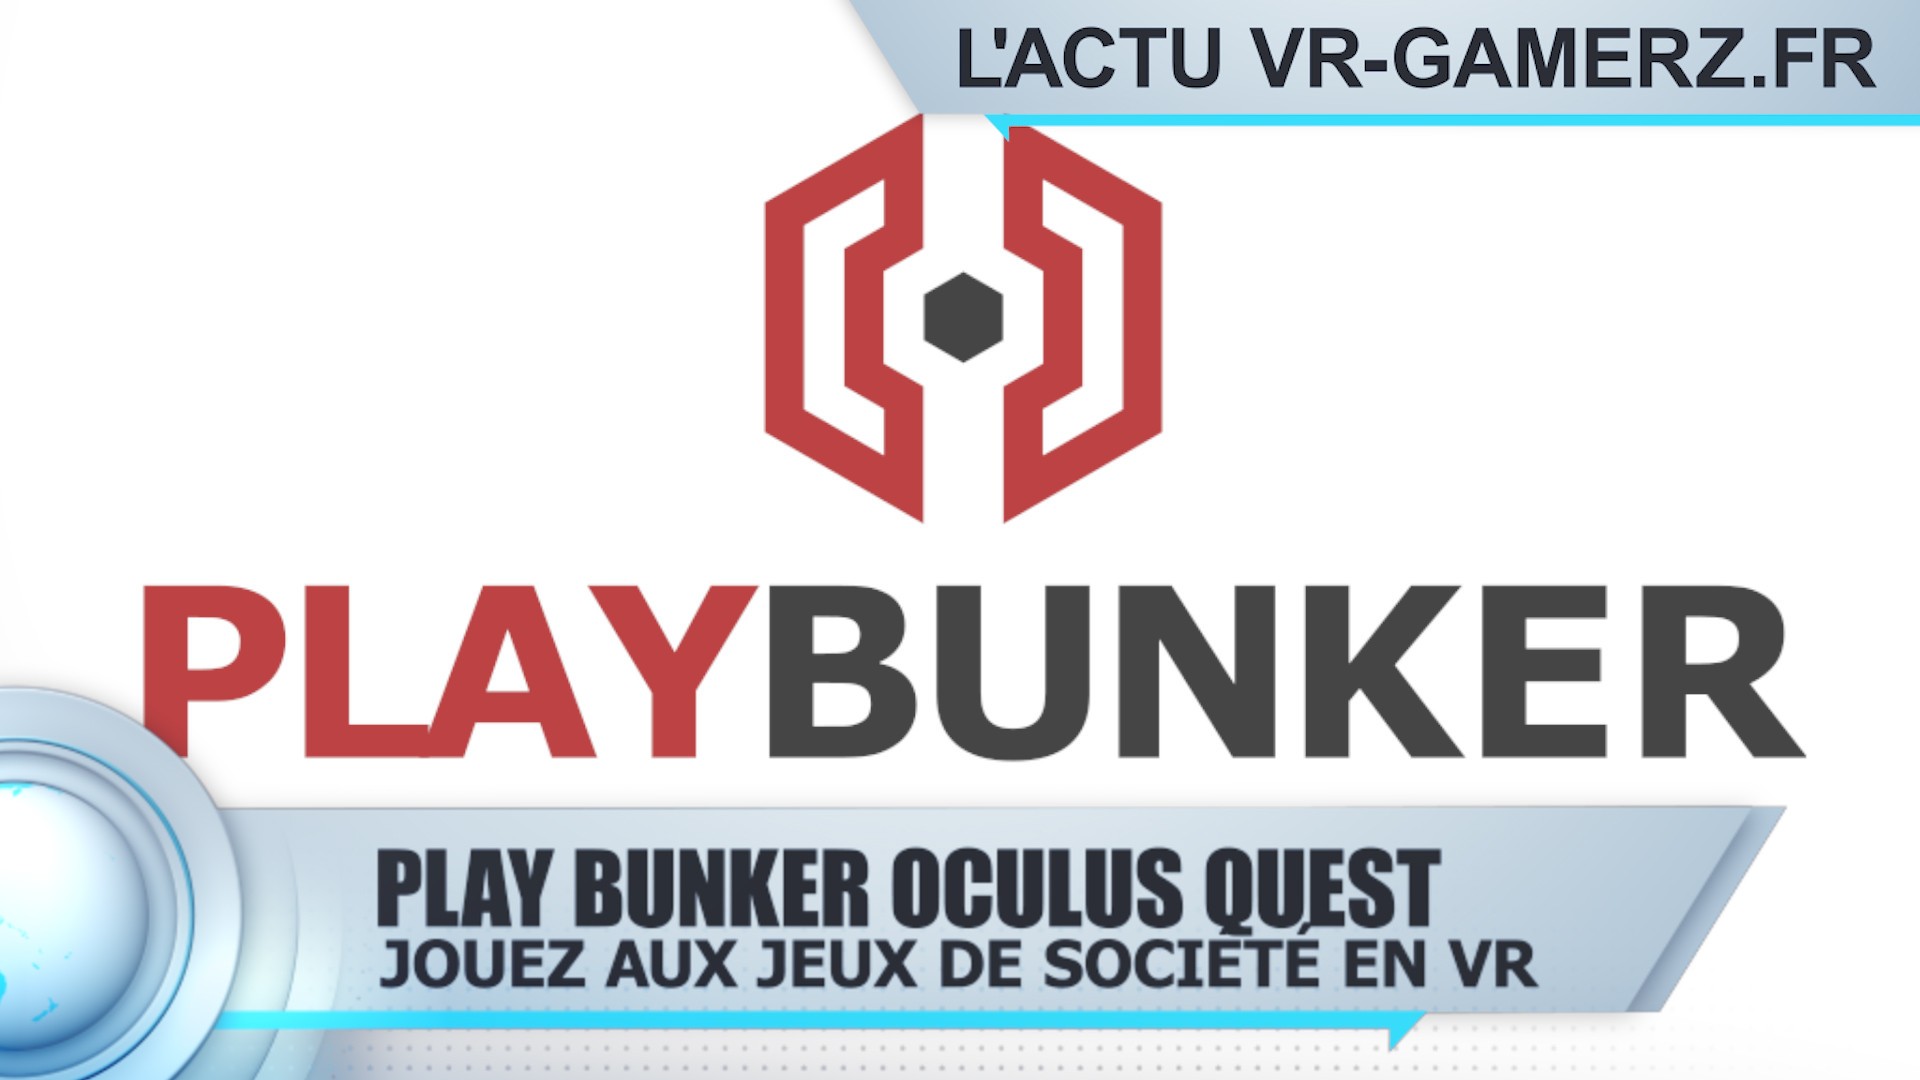 Play Bunker Oculus quest